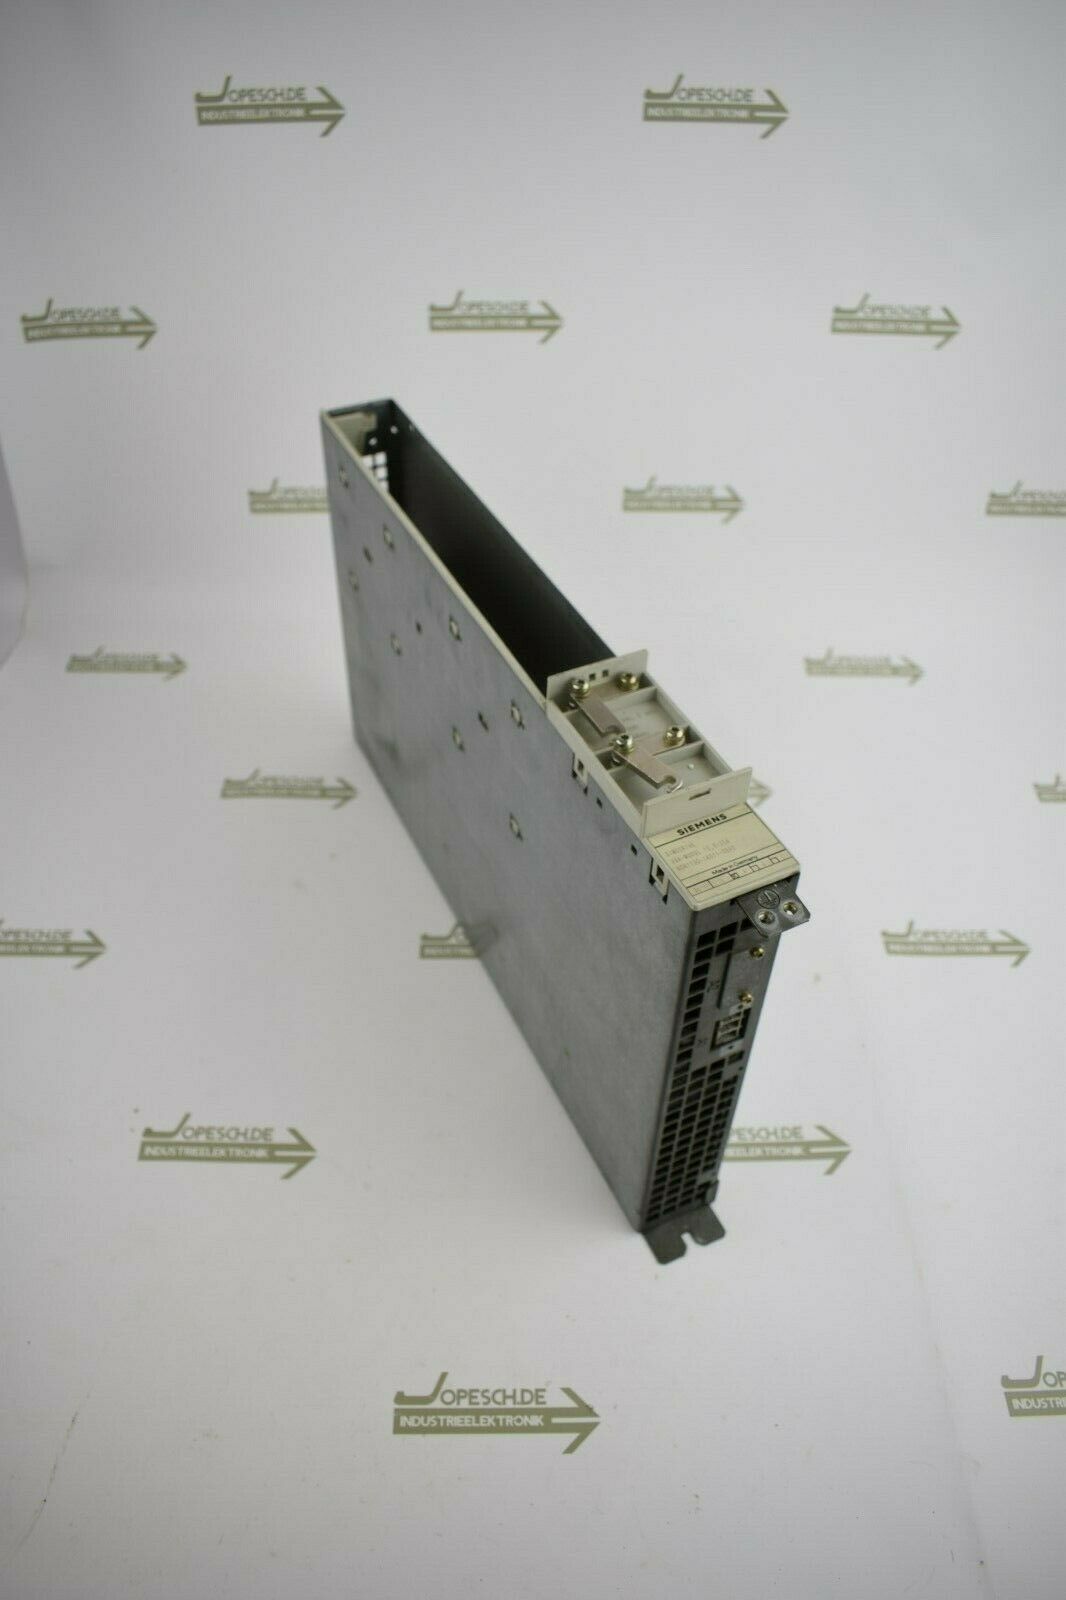 Siemens simodrive VSA-Modul 6SN1 130-1AD11-0BA0 ( 6SN1130-1AD11-0BA0 )